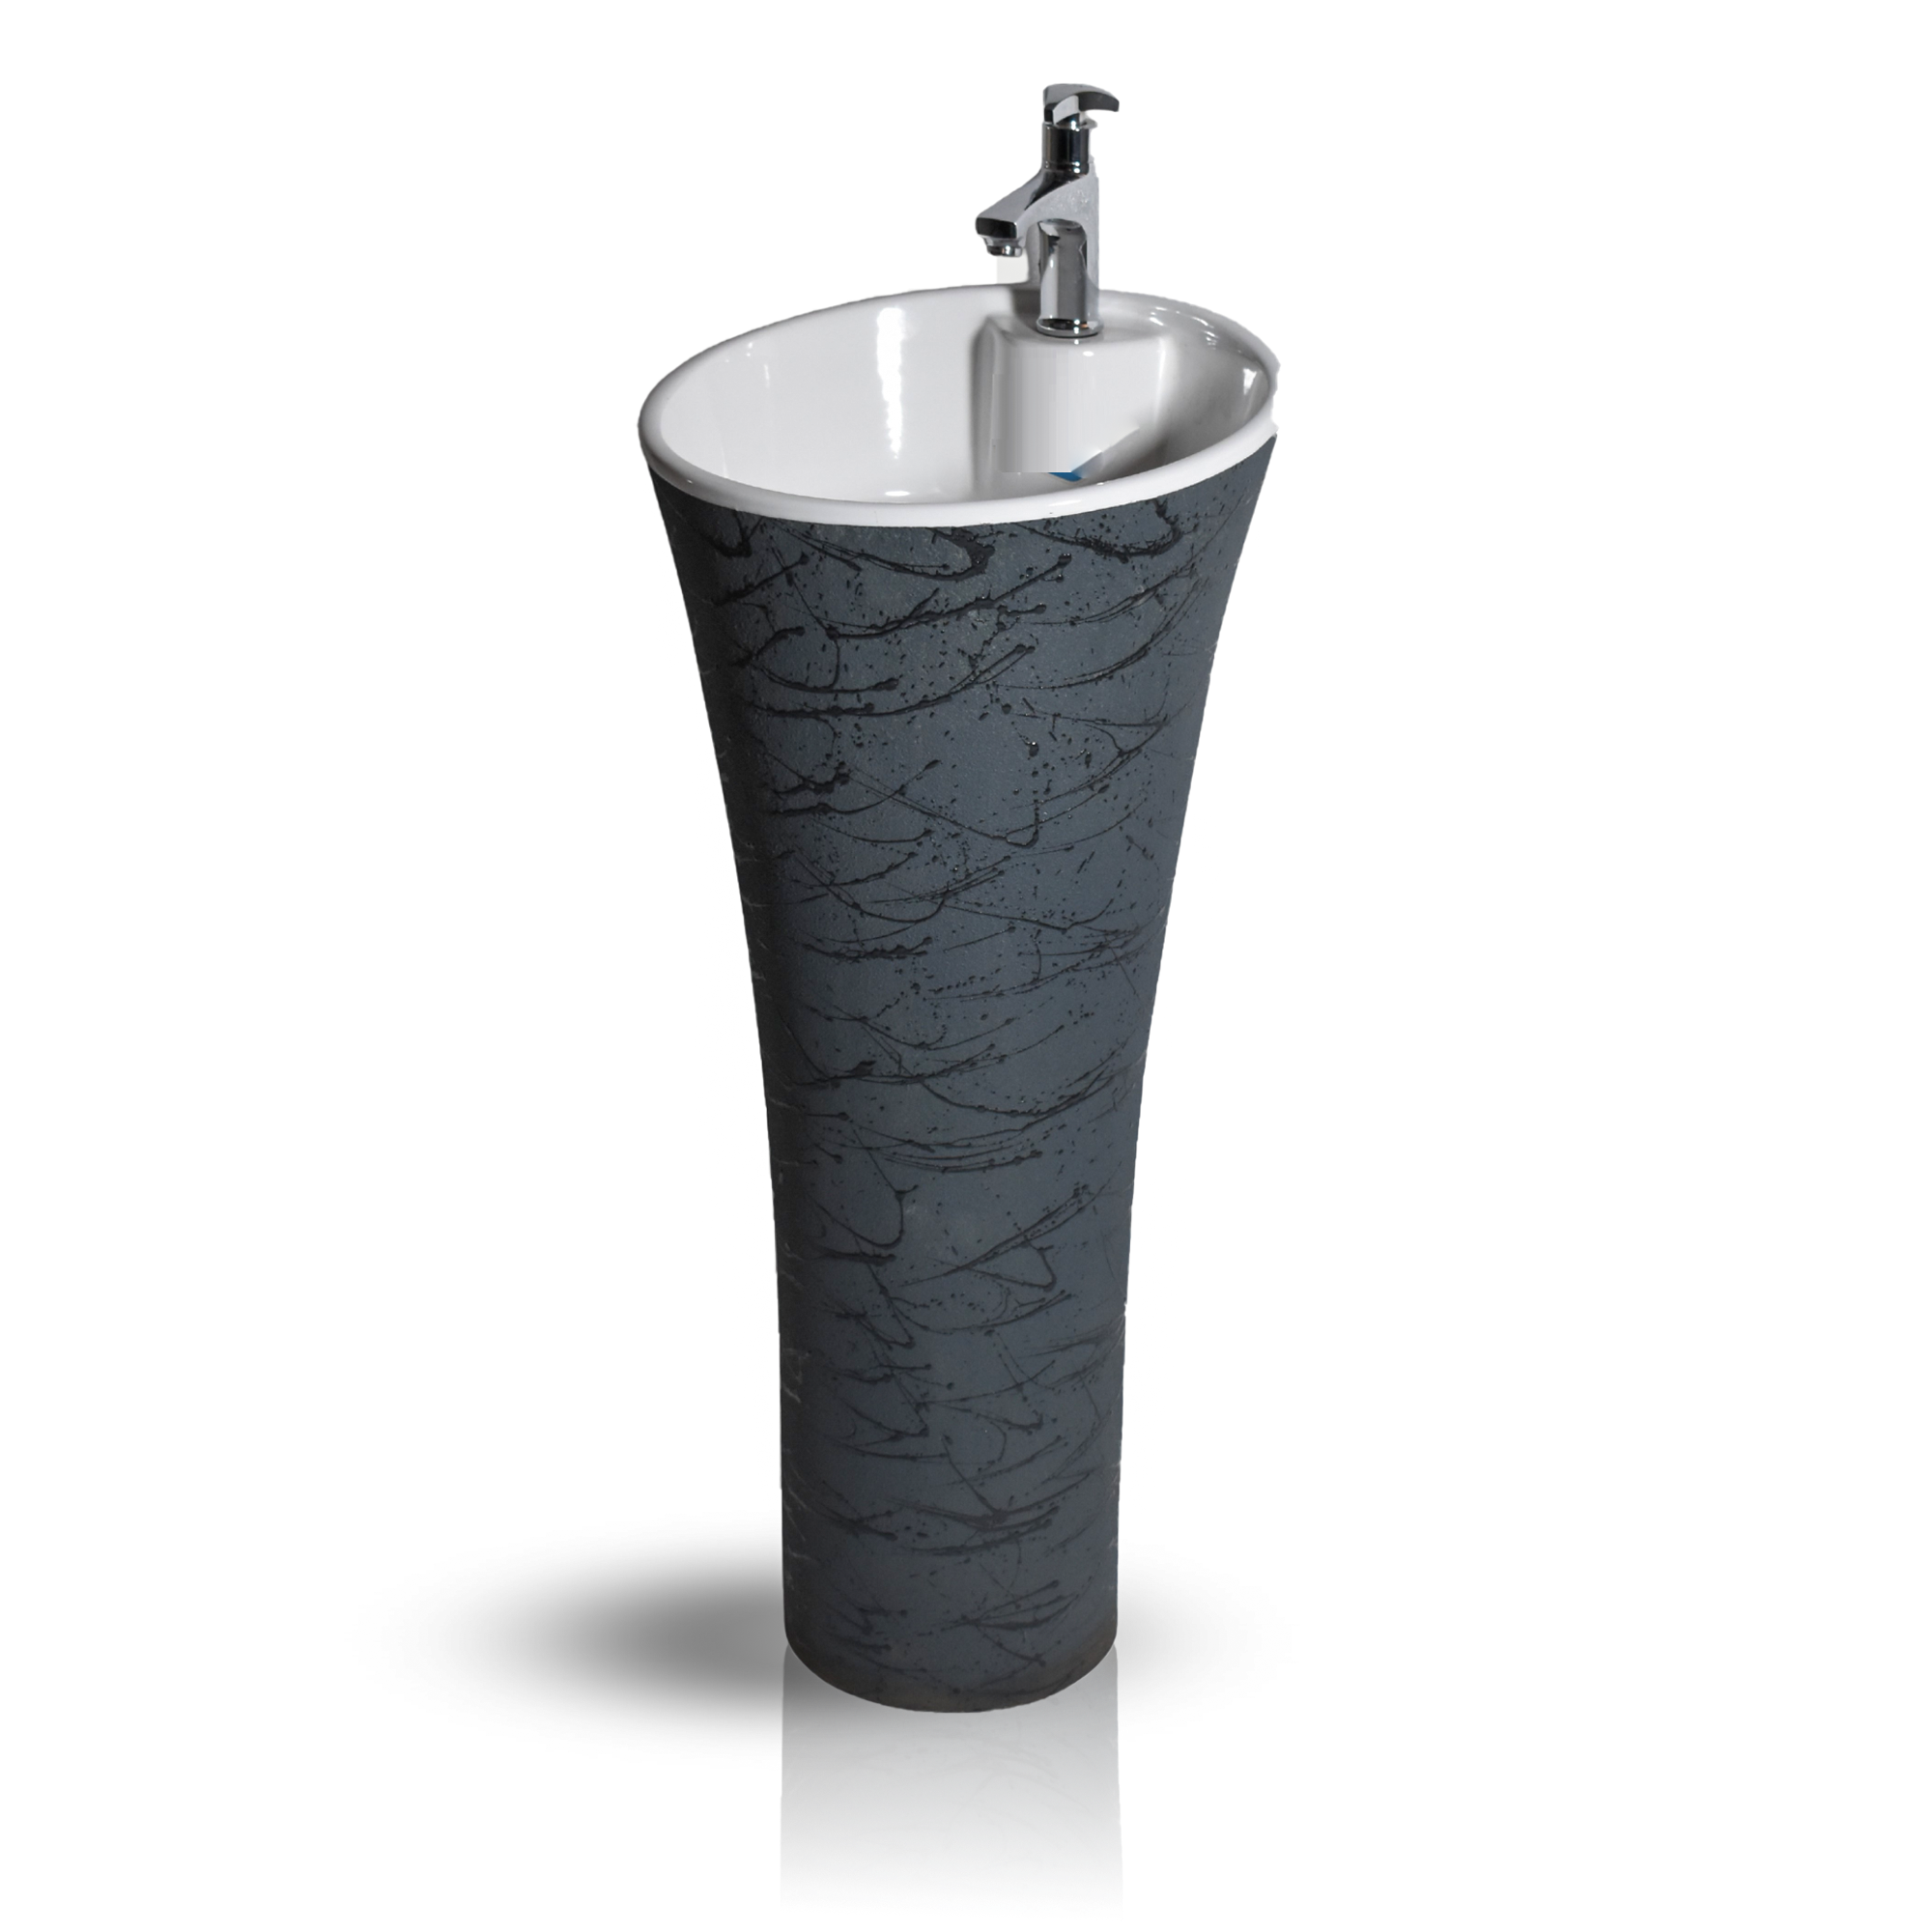 inart ceramic pedestal free standing wash basin in grey color